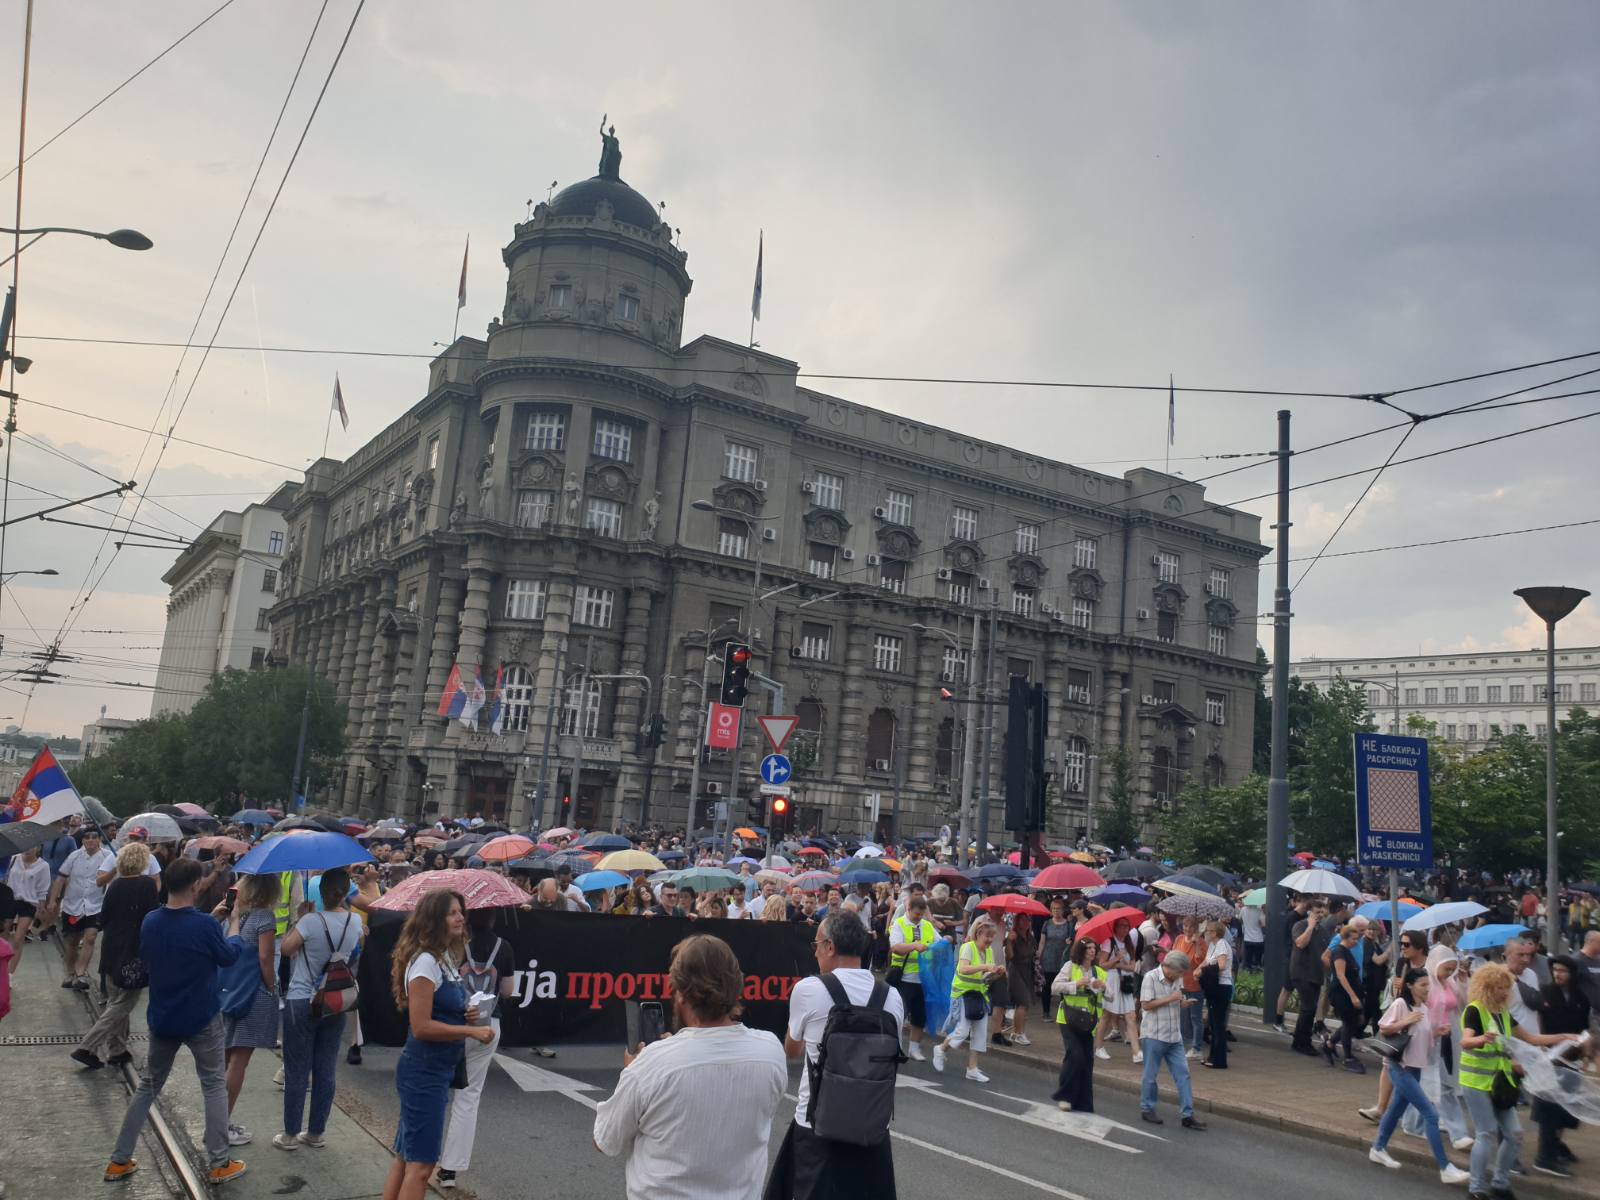 Protest "Srbija protiv nasilja" u preko 10 gradova obeležile šetnje, blokade puteva i zahtevi za ostavkama (FOTO, VIDEO) 30